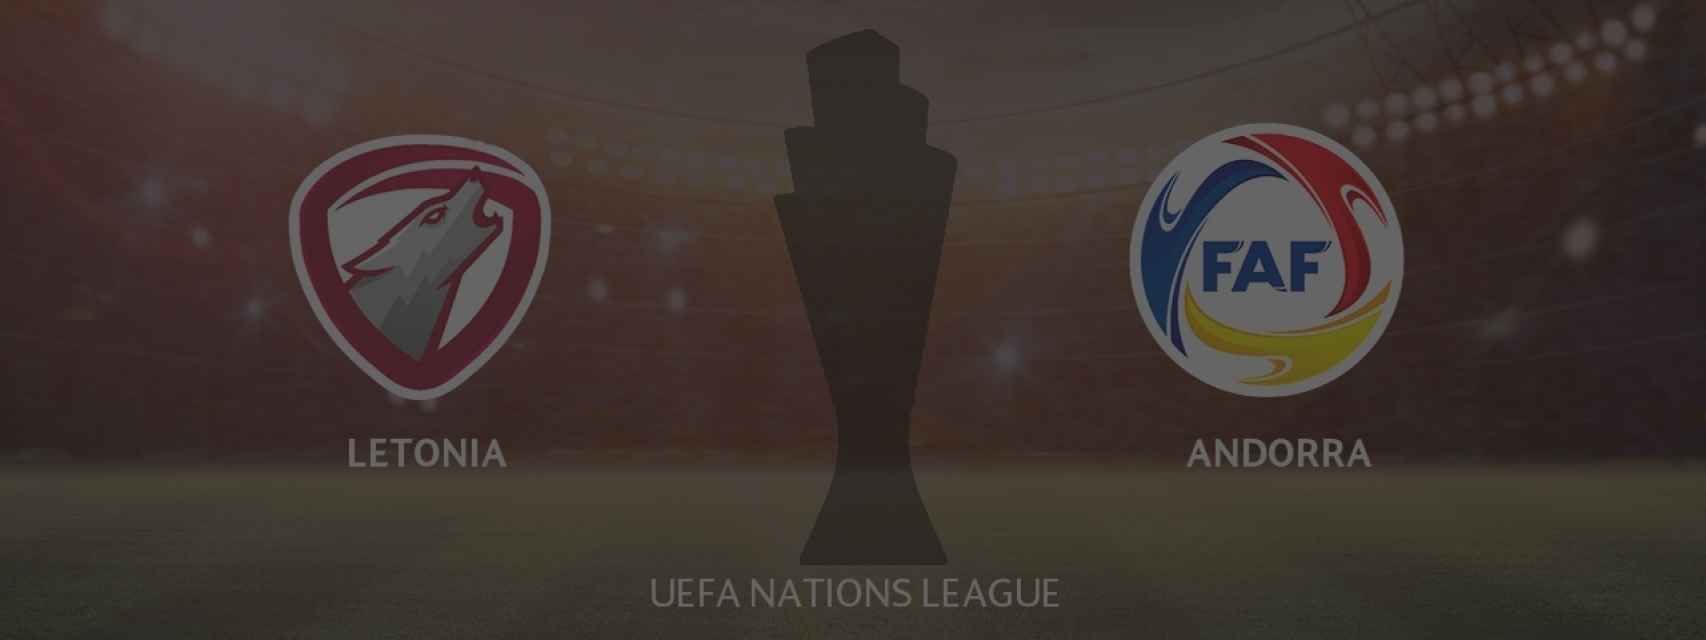 Letonia - Andorra, UEFA Nations League